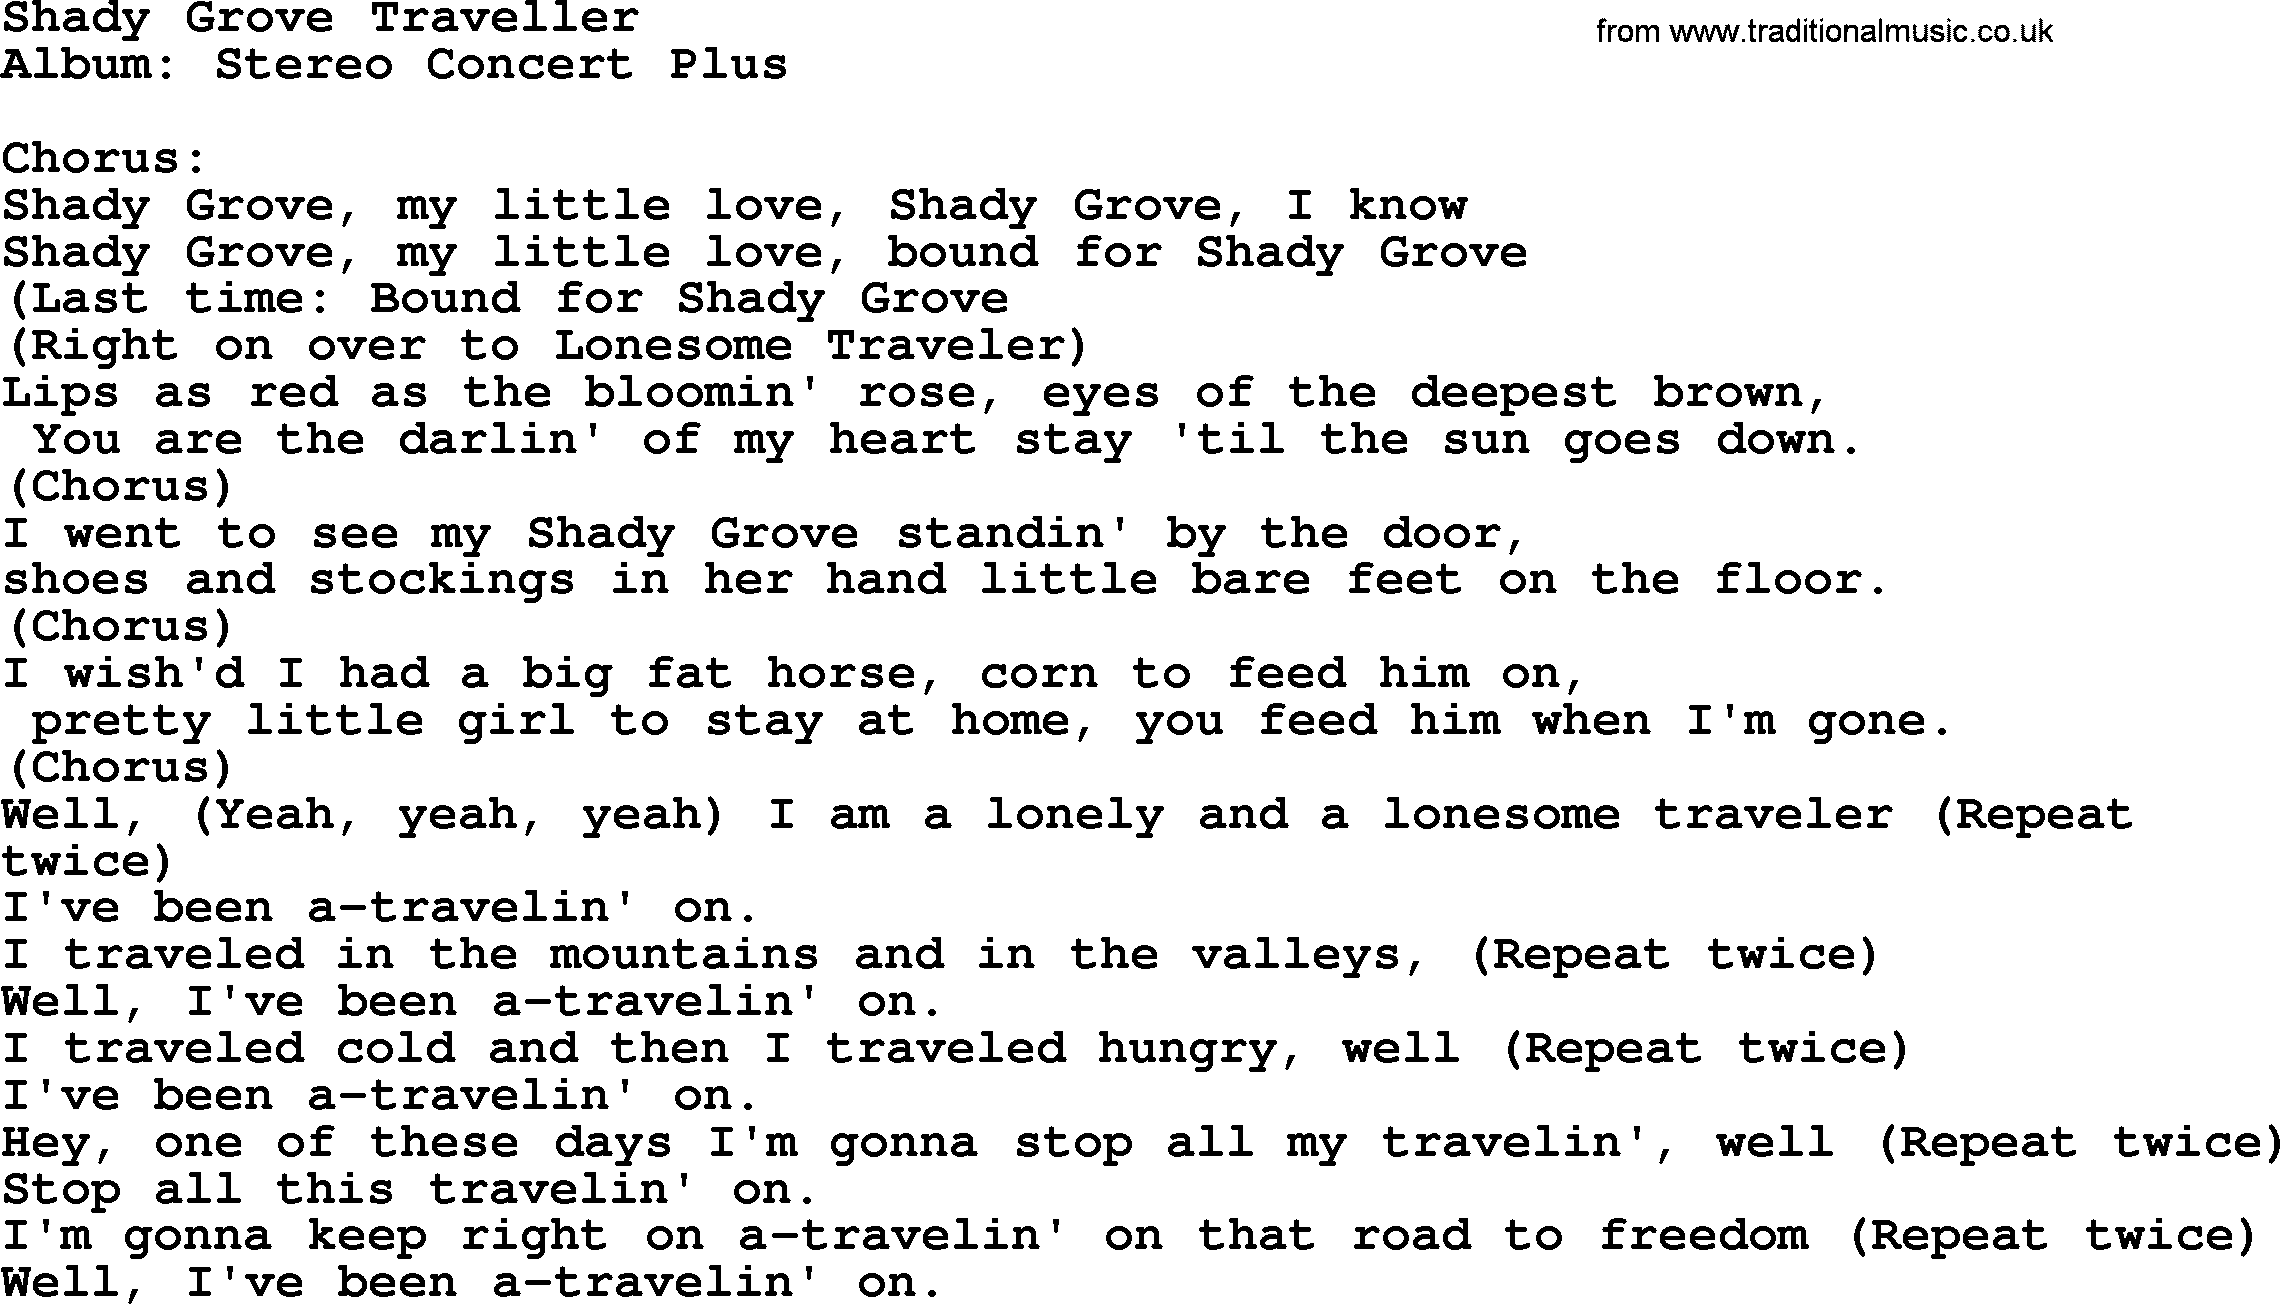 Kingston Trio song Shady Grove Traveller, lyrics